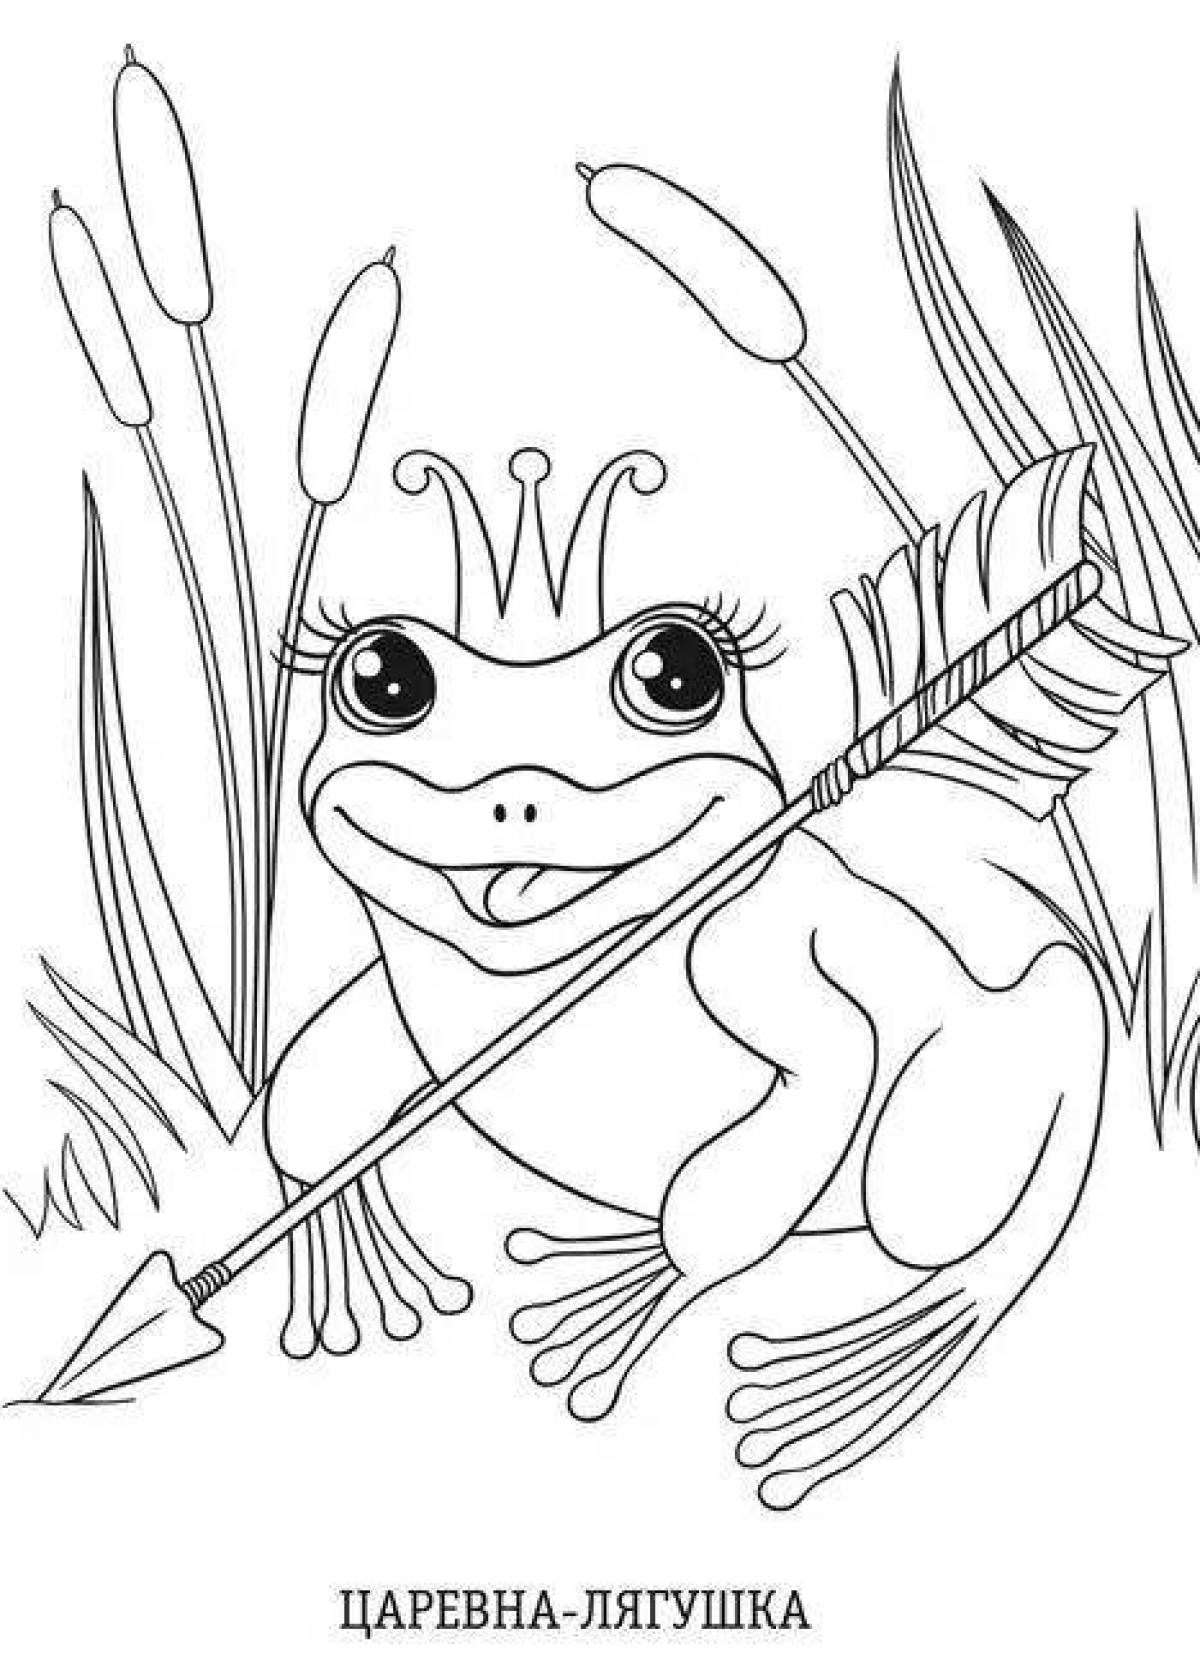 Срисовки царевны-лягушки (50 картинок)